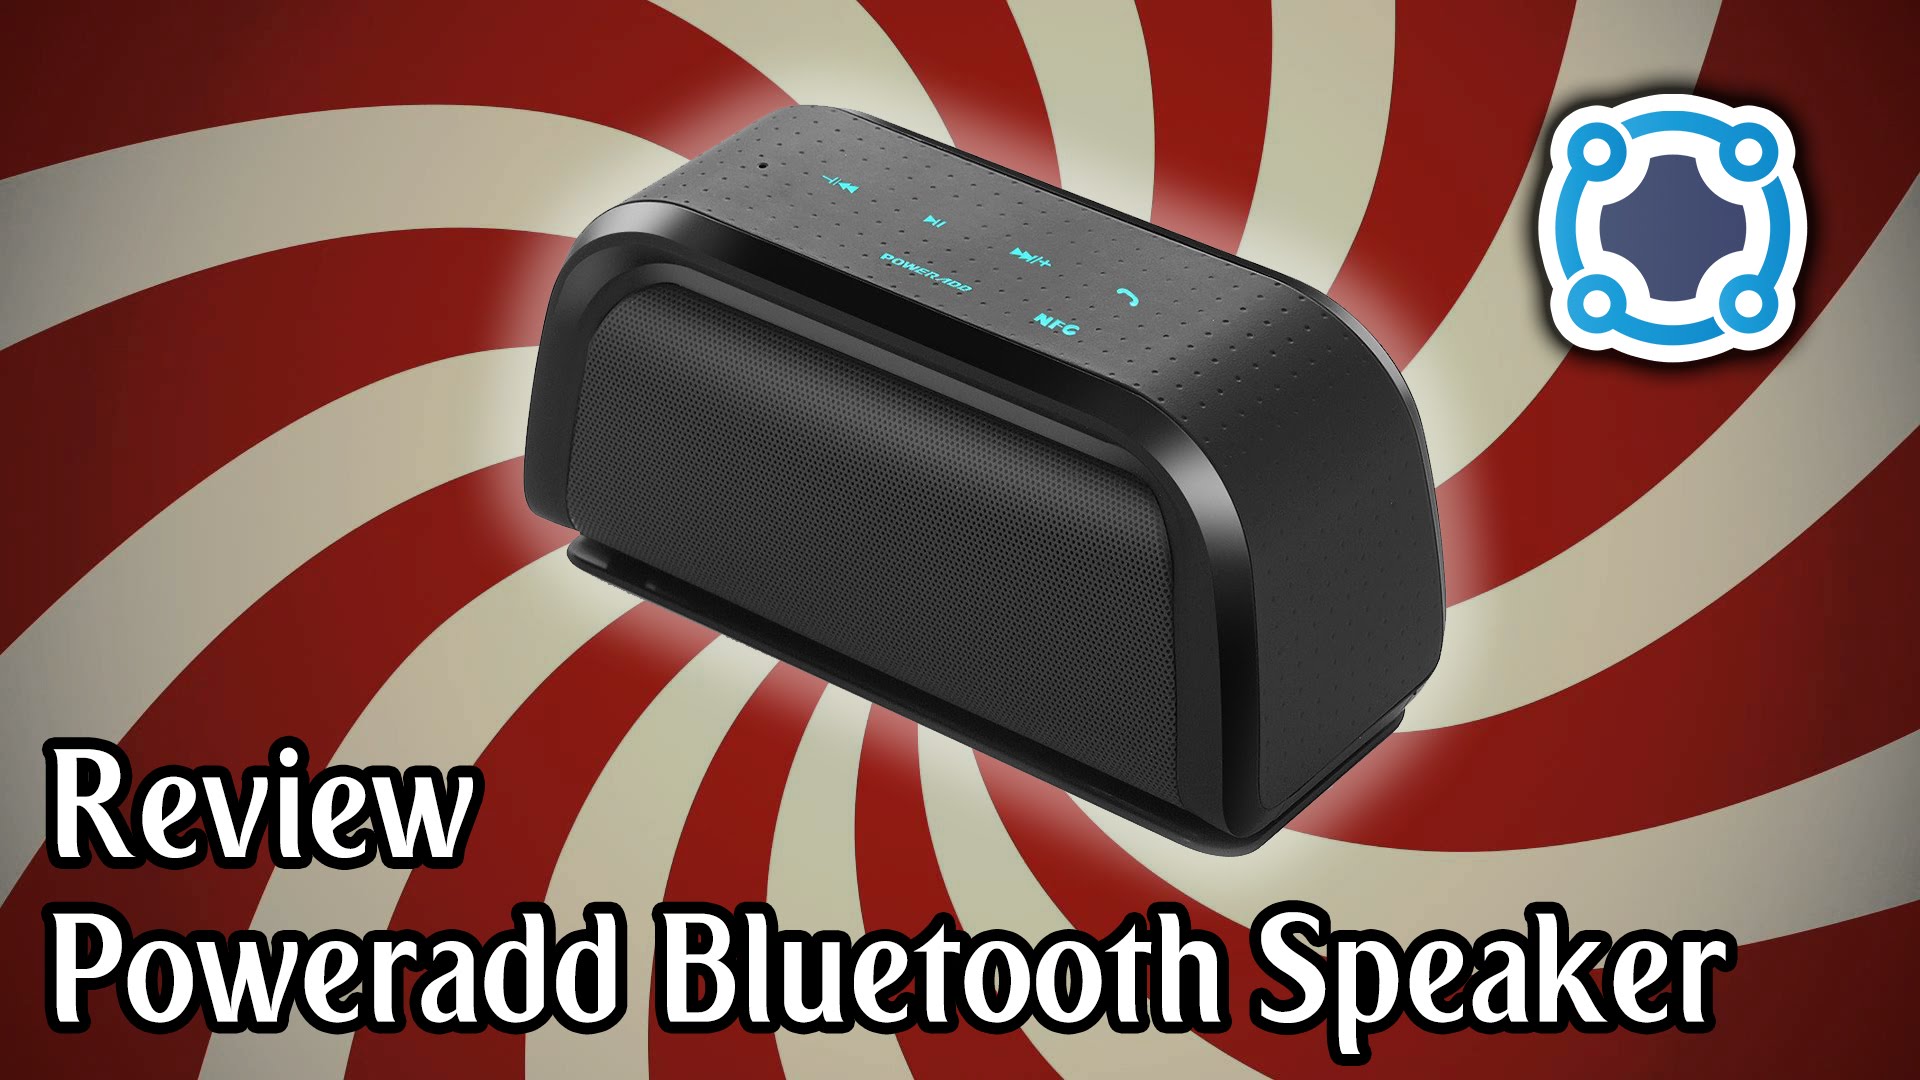 Review: Poweradd Bluetooth Wireless Speaker